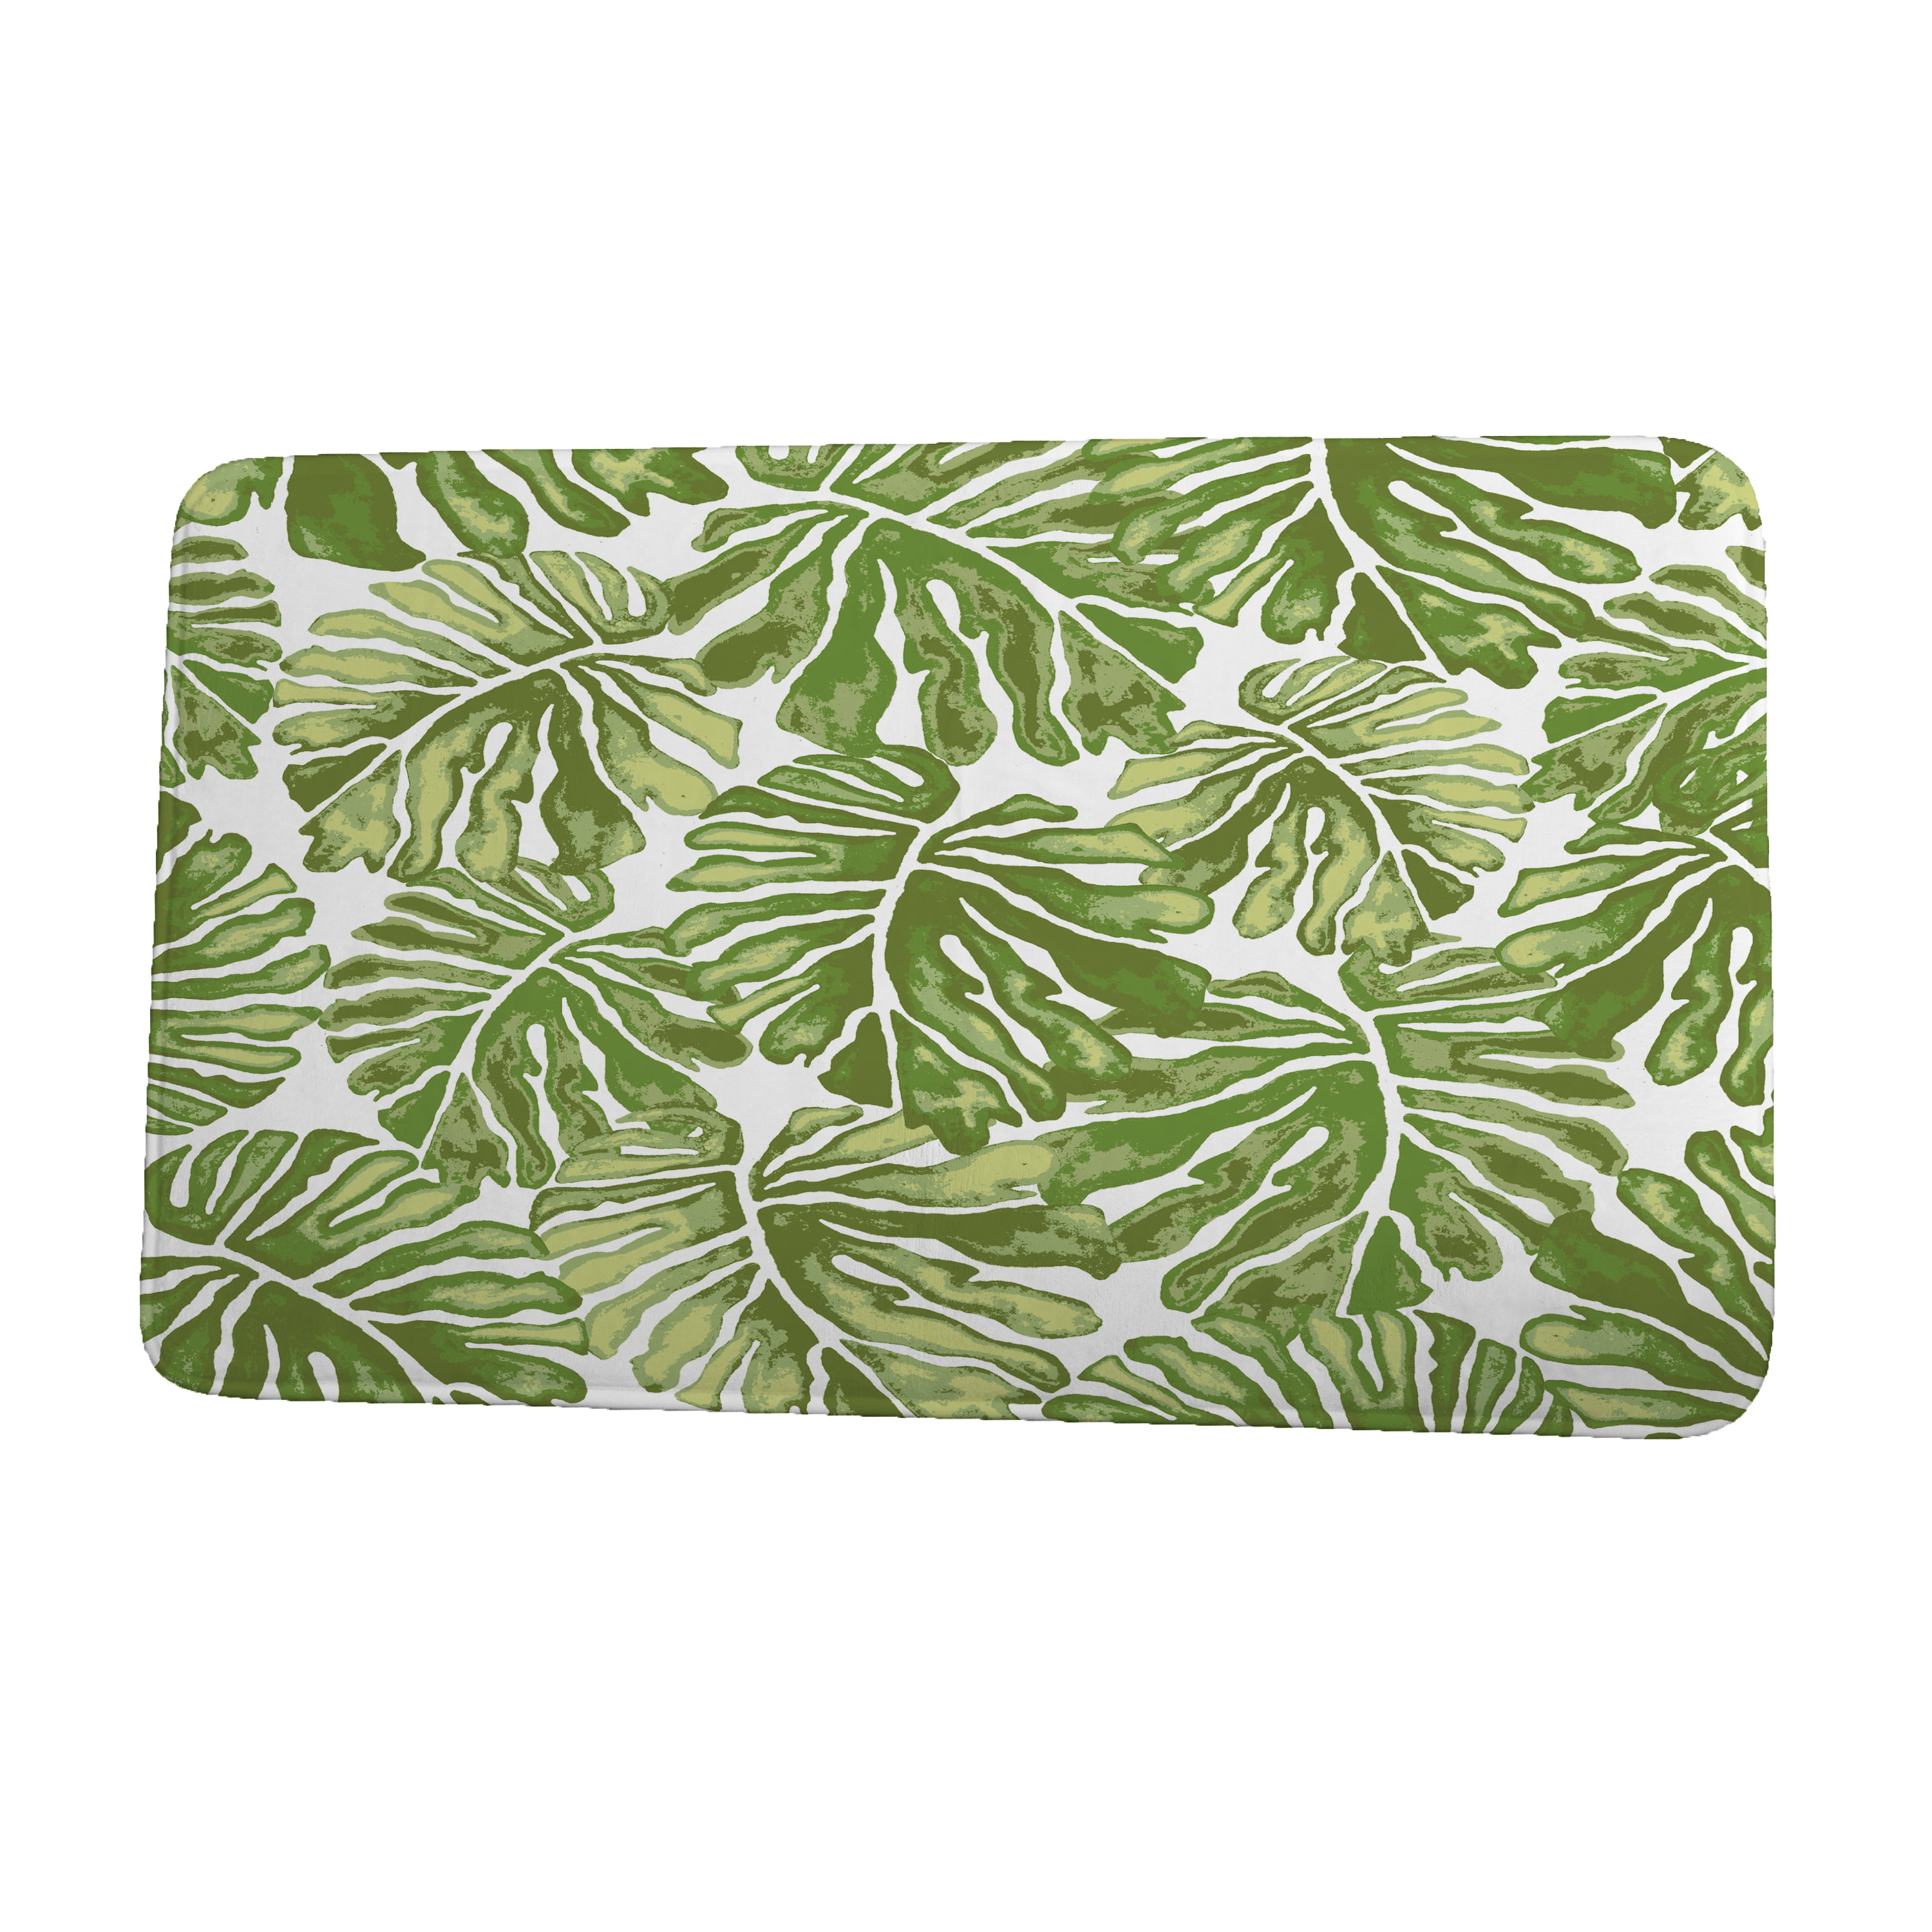 Gear New Decorative Abstract Floral Pattern Palm Leaves Bath Rug Mat No Slip Microfiber Memory Foam